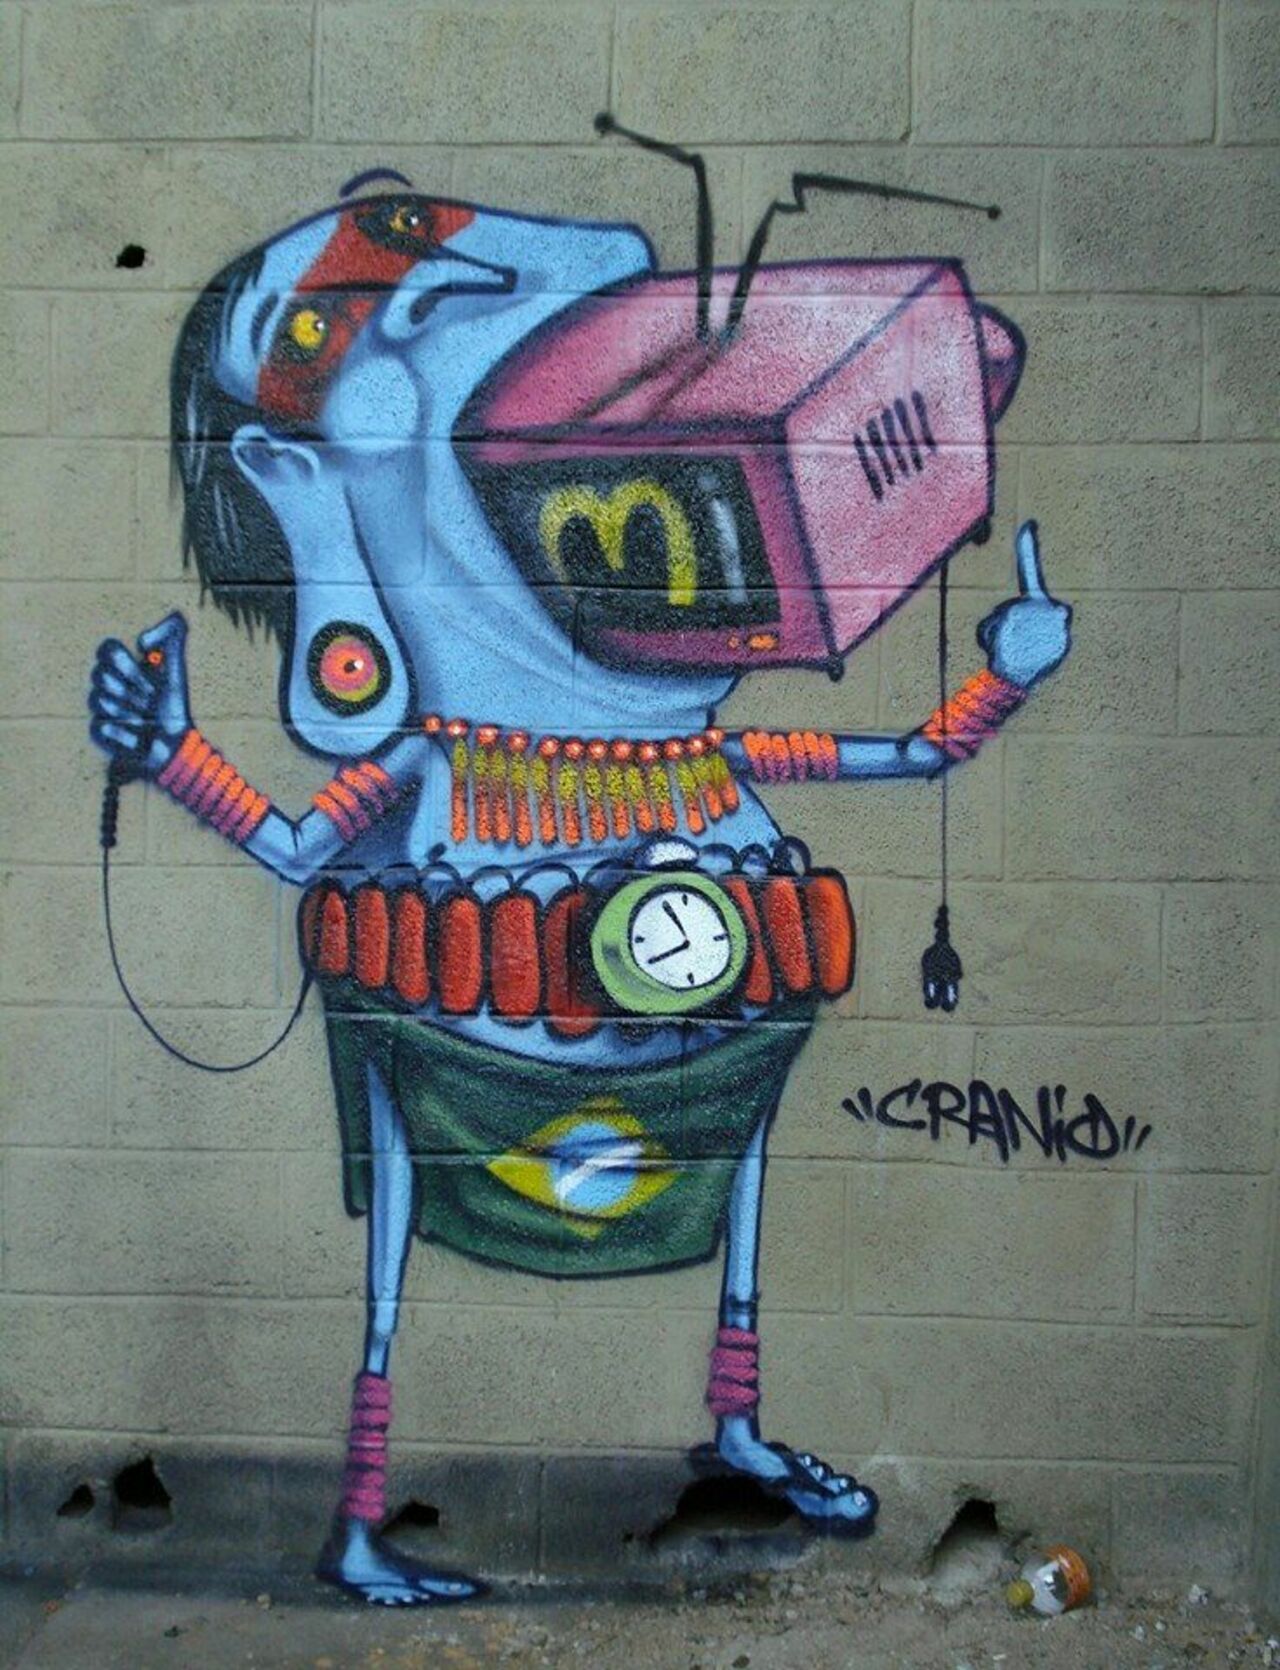 Oh yessss! Love it #Graffiti #UrbanArt RT “@fam: Artist : Cranio http://bit.ly/11LcrEH #streetart #art http://t.co/nZOKb8sVRA”